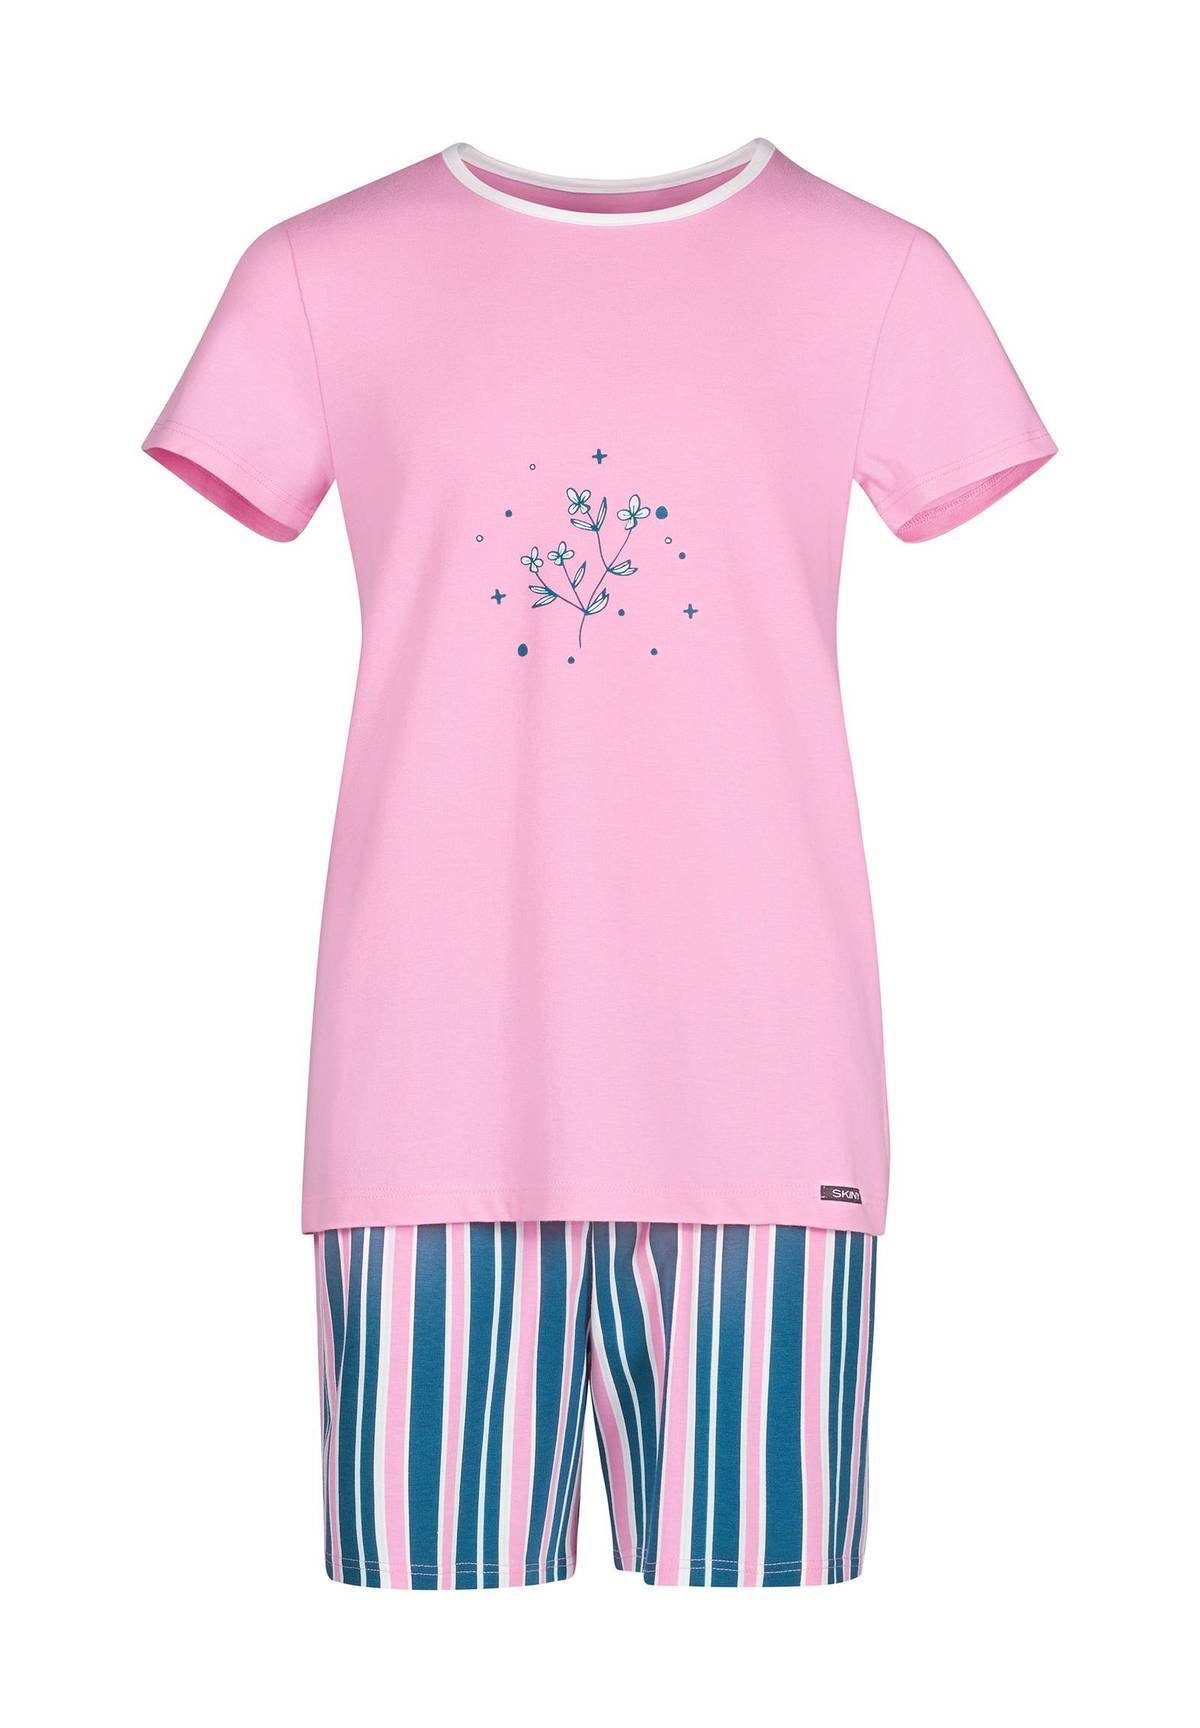 Skiny Pyjama Mädchen Schlafanzug Set - kurz, Kinder, 2-tlg. Pink/Blau | Shortys